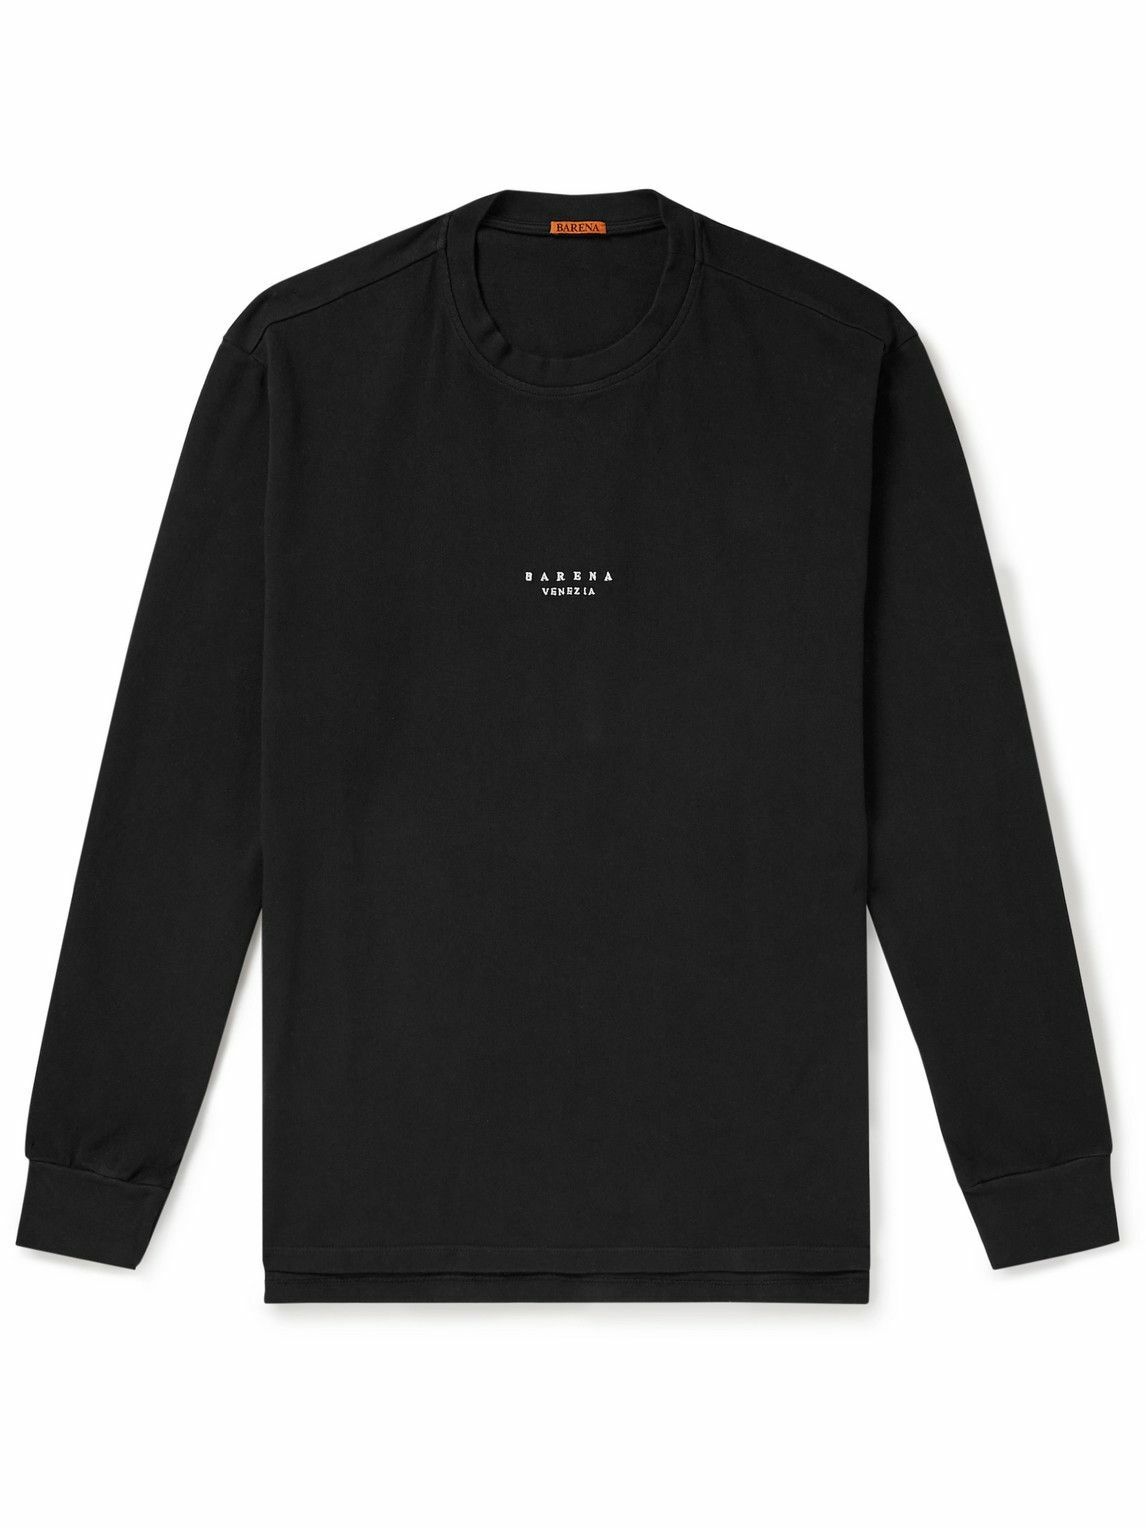 Barena - Logo-Embroidered Cotton-Jersey T-Shirt - Black Barena